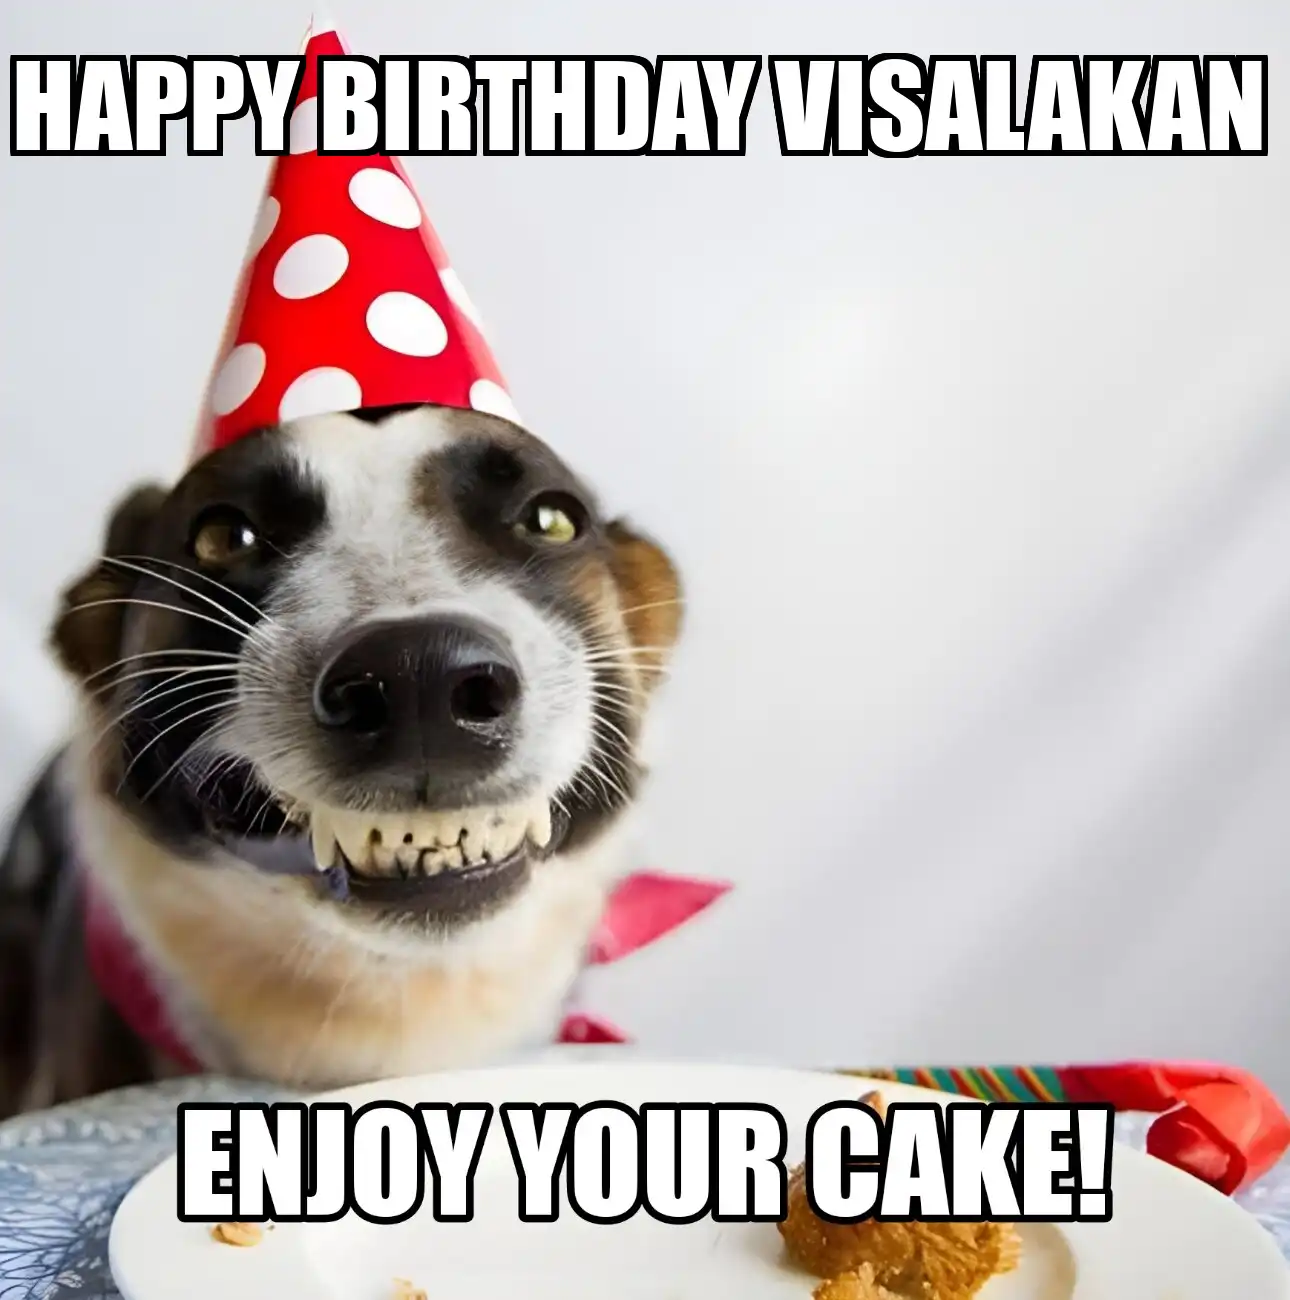 Happy Birthday Visalakan Enjoy Your Cake Dog Meme